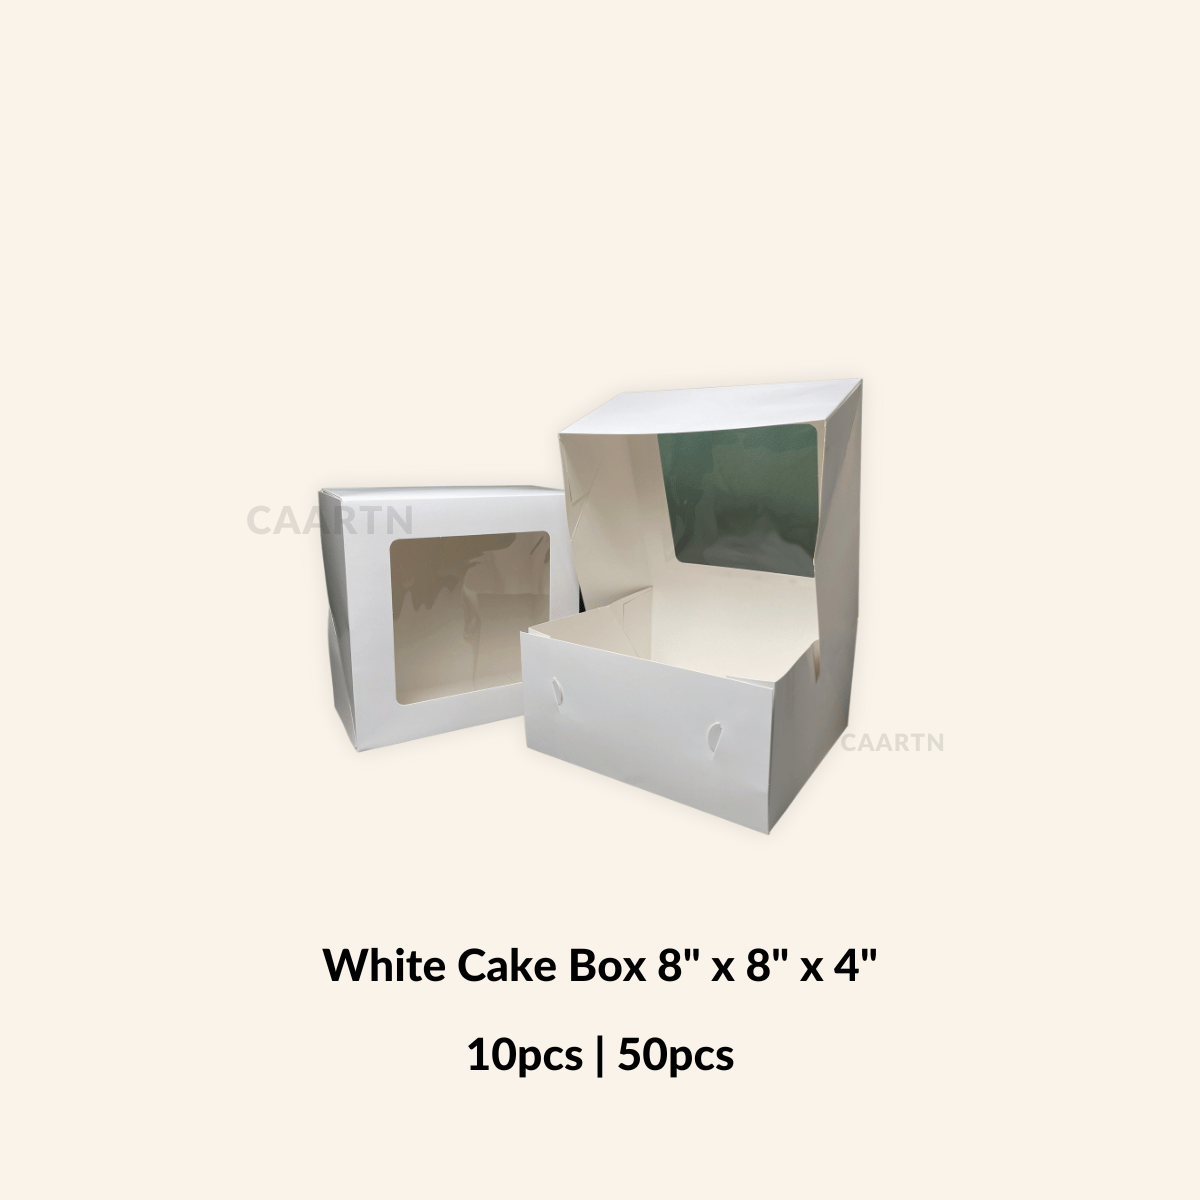 White Cake Box 8" x 8" x 4"